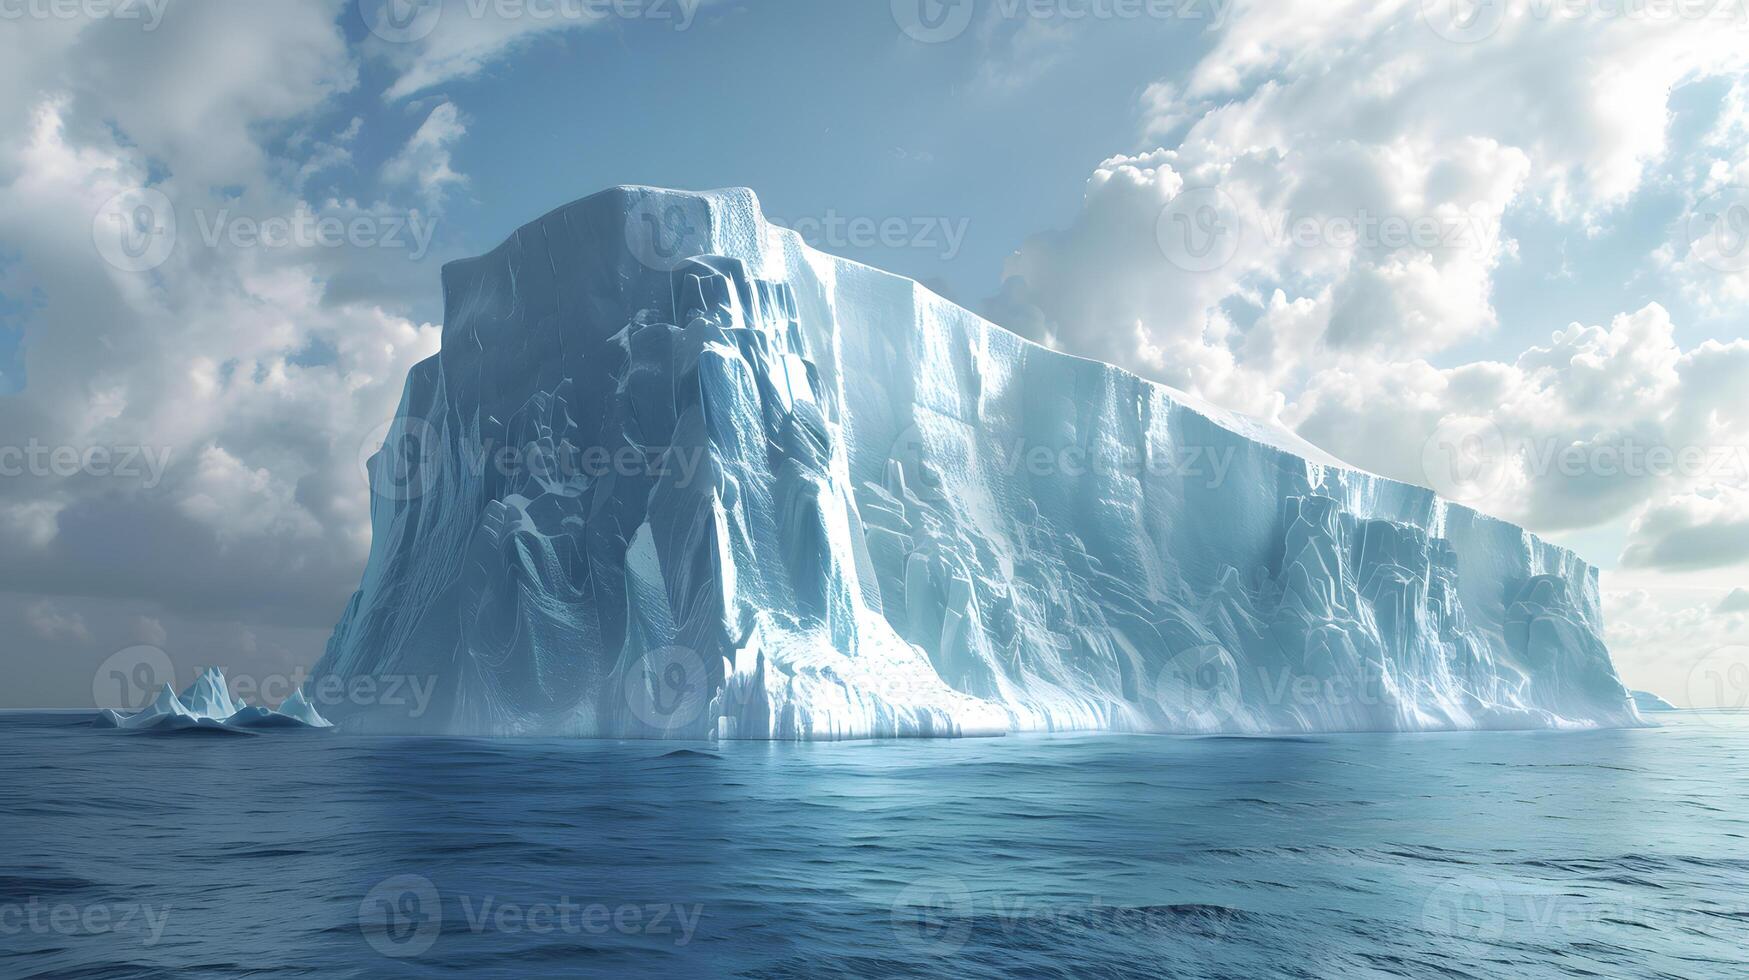 A huge iceberg or glacier in Arctic or Antarctic waters photo